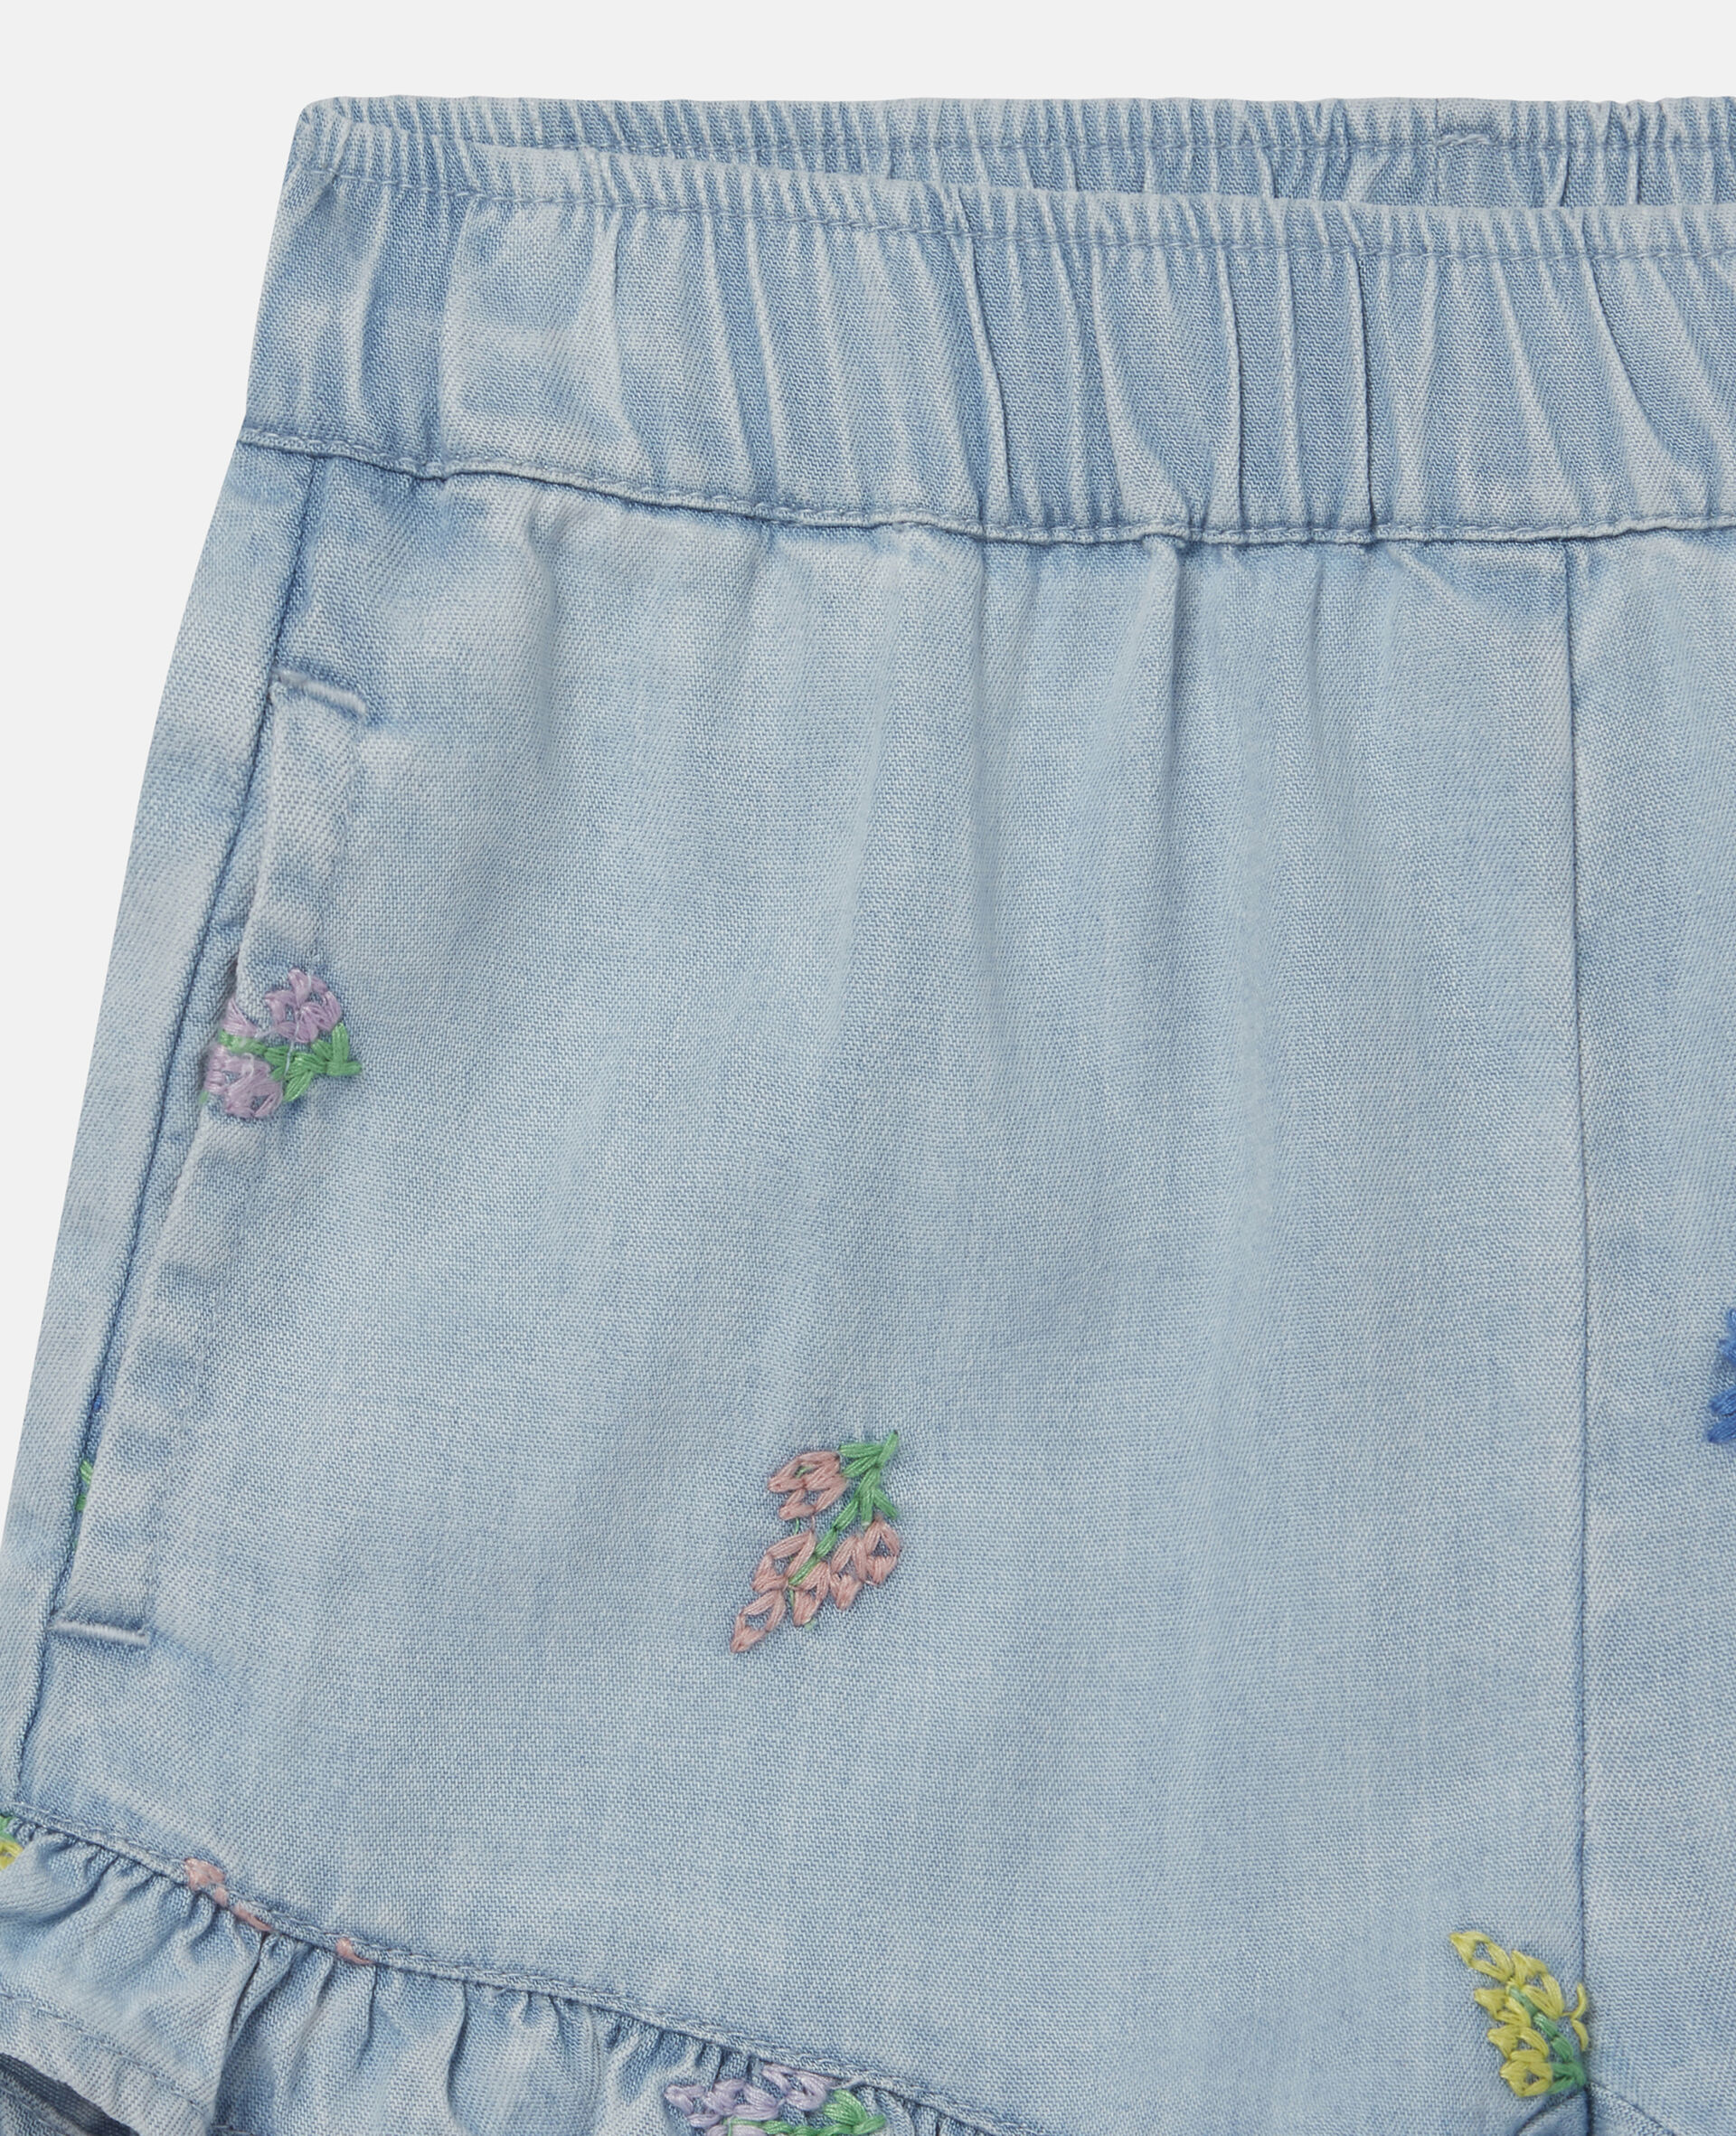 Embroidered Flowers Denim Shorts-Blue-large image number 1